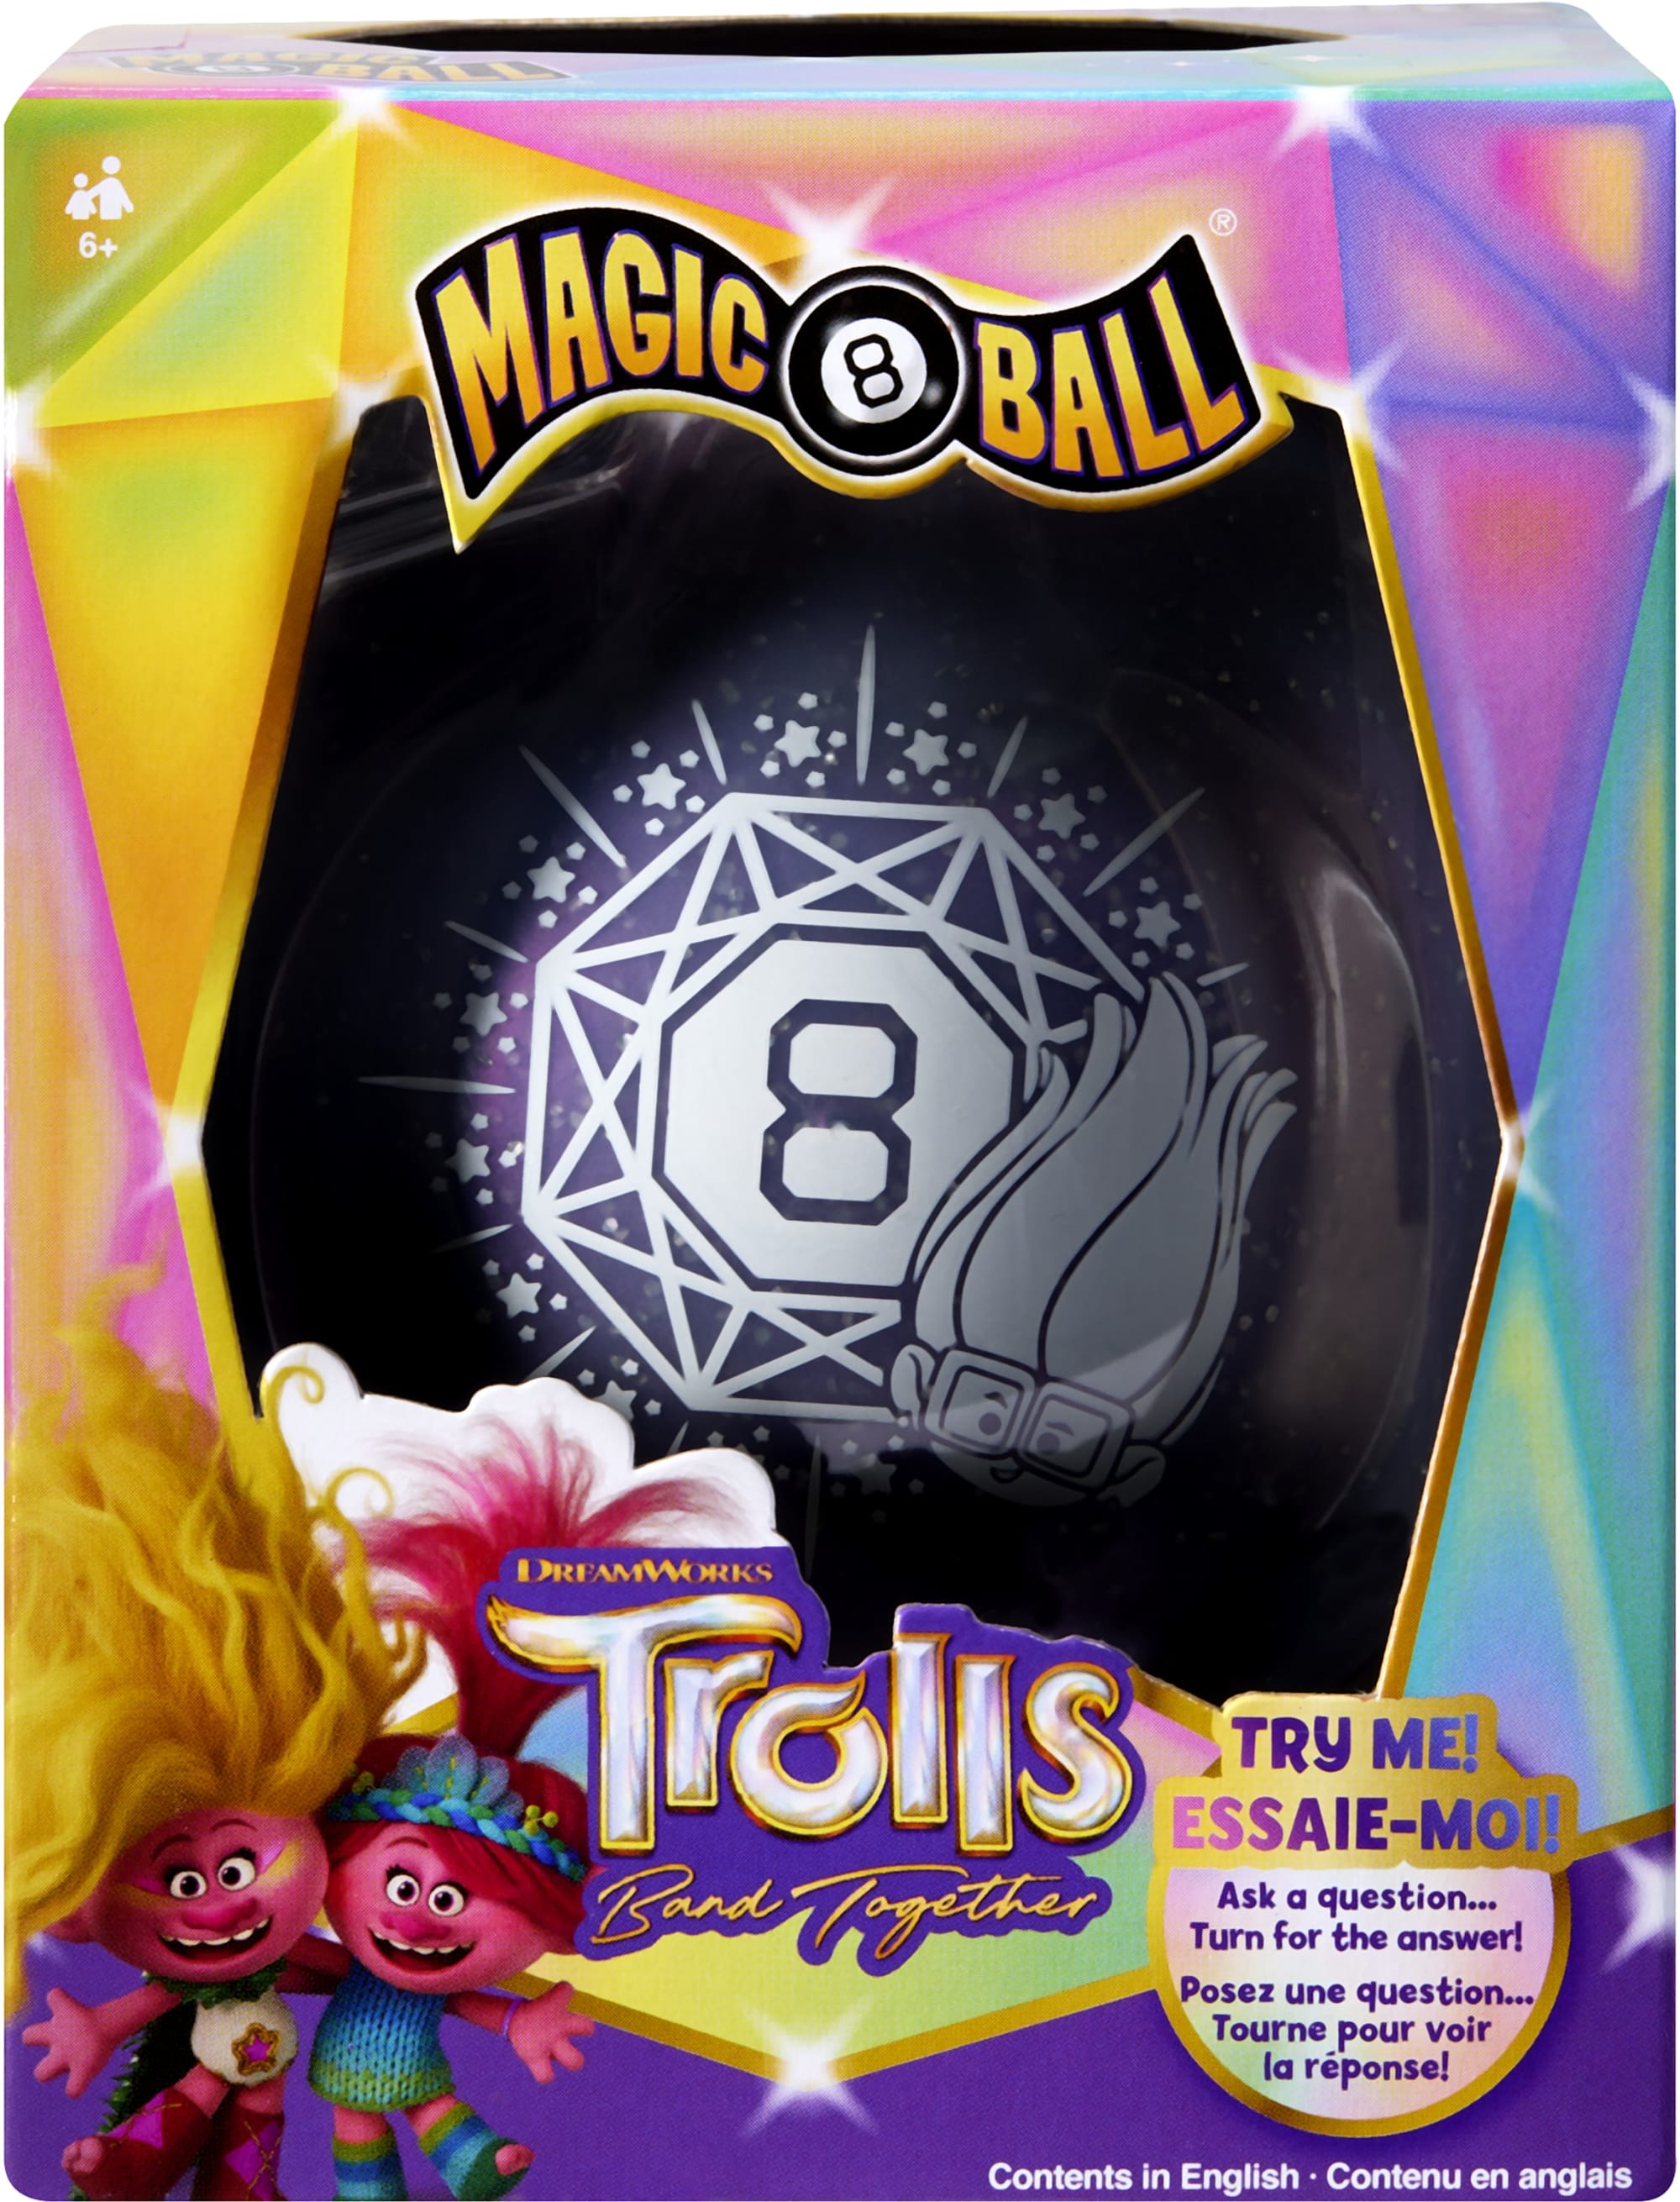 Magic 8 Ball Trolls Band Together Fortune Teller